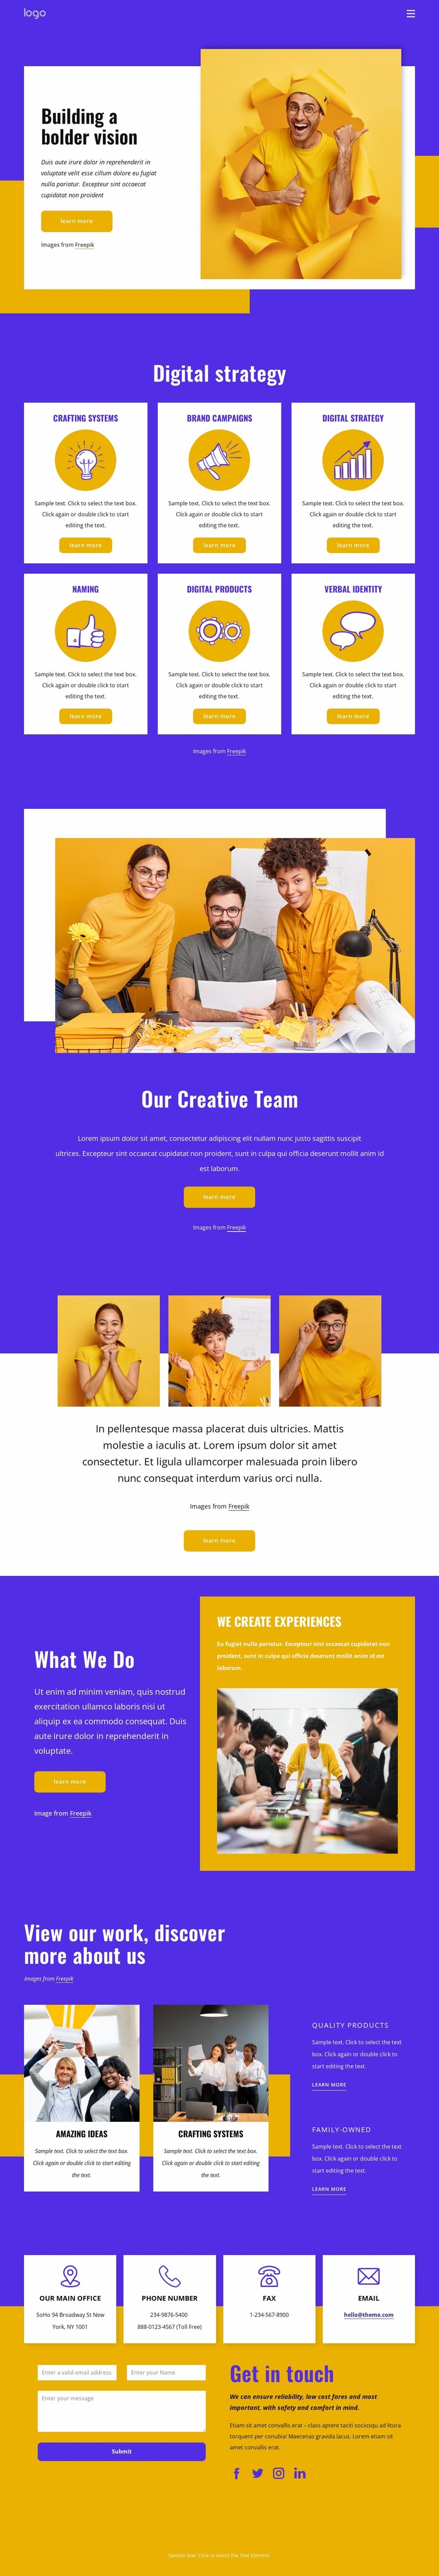 UX design and branding agency Website Mockup